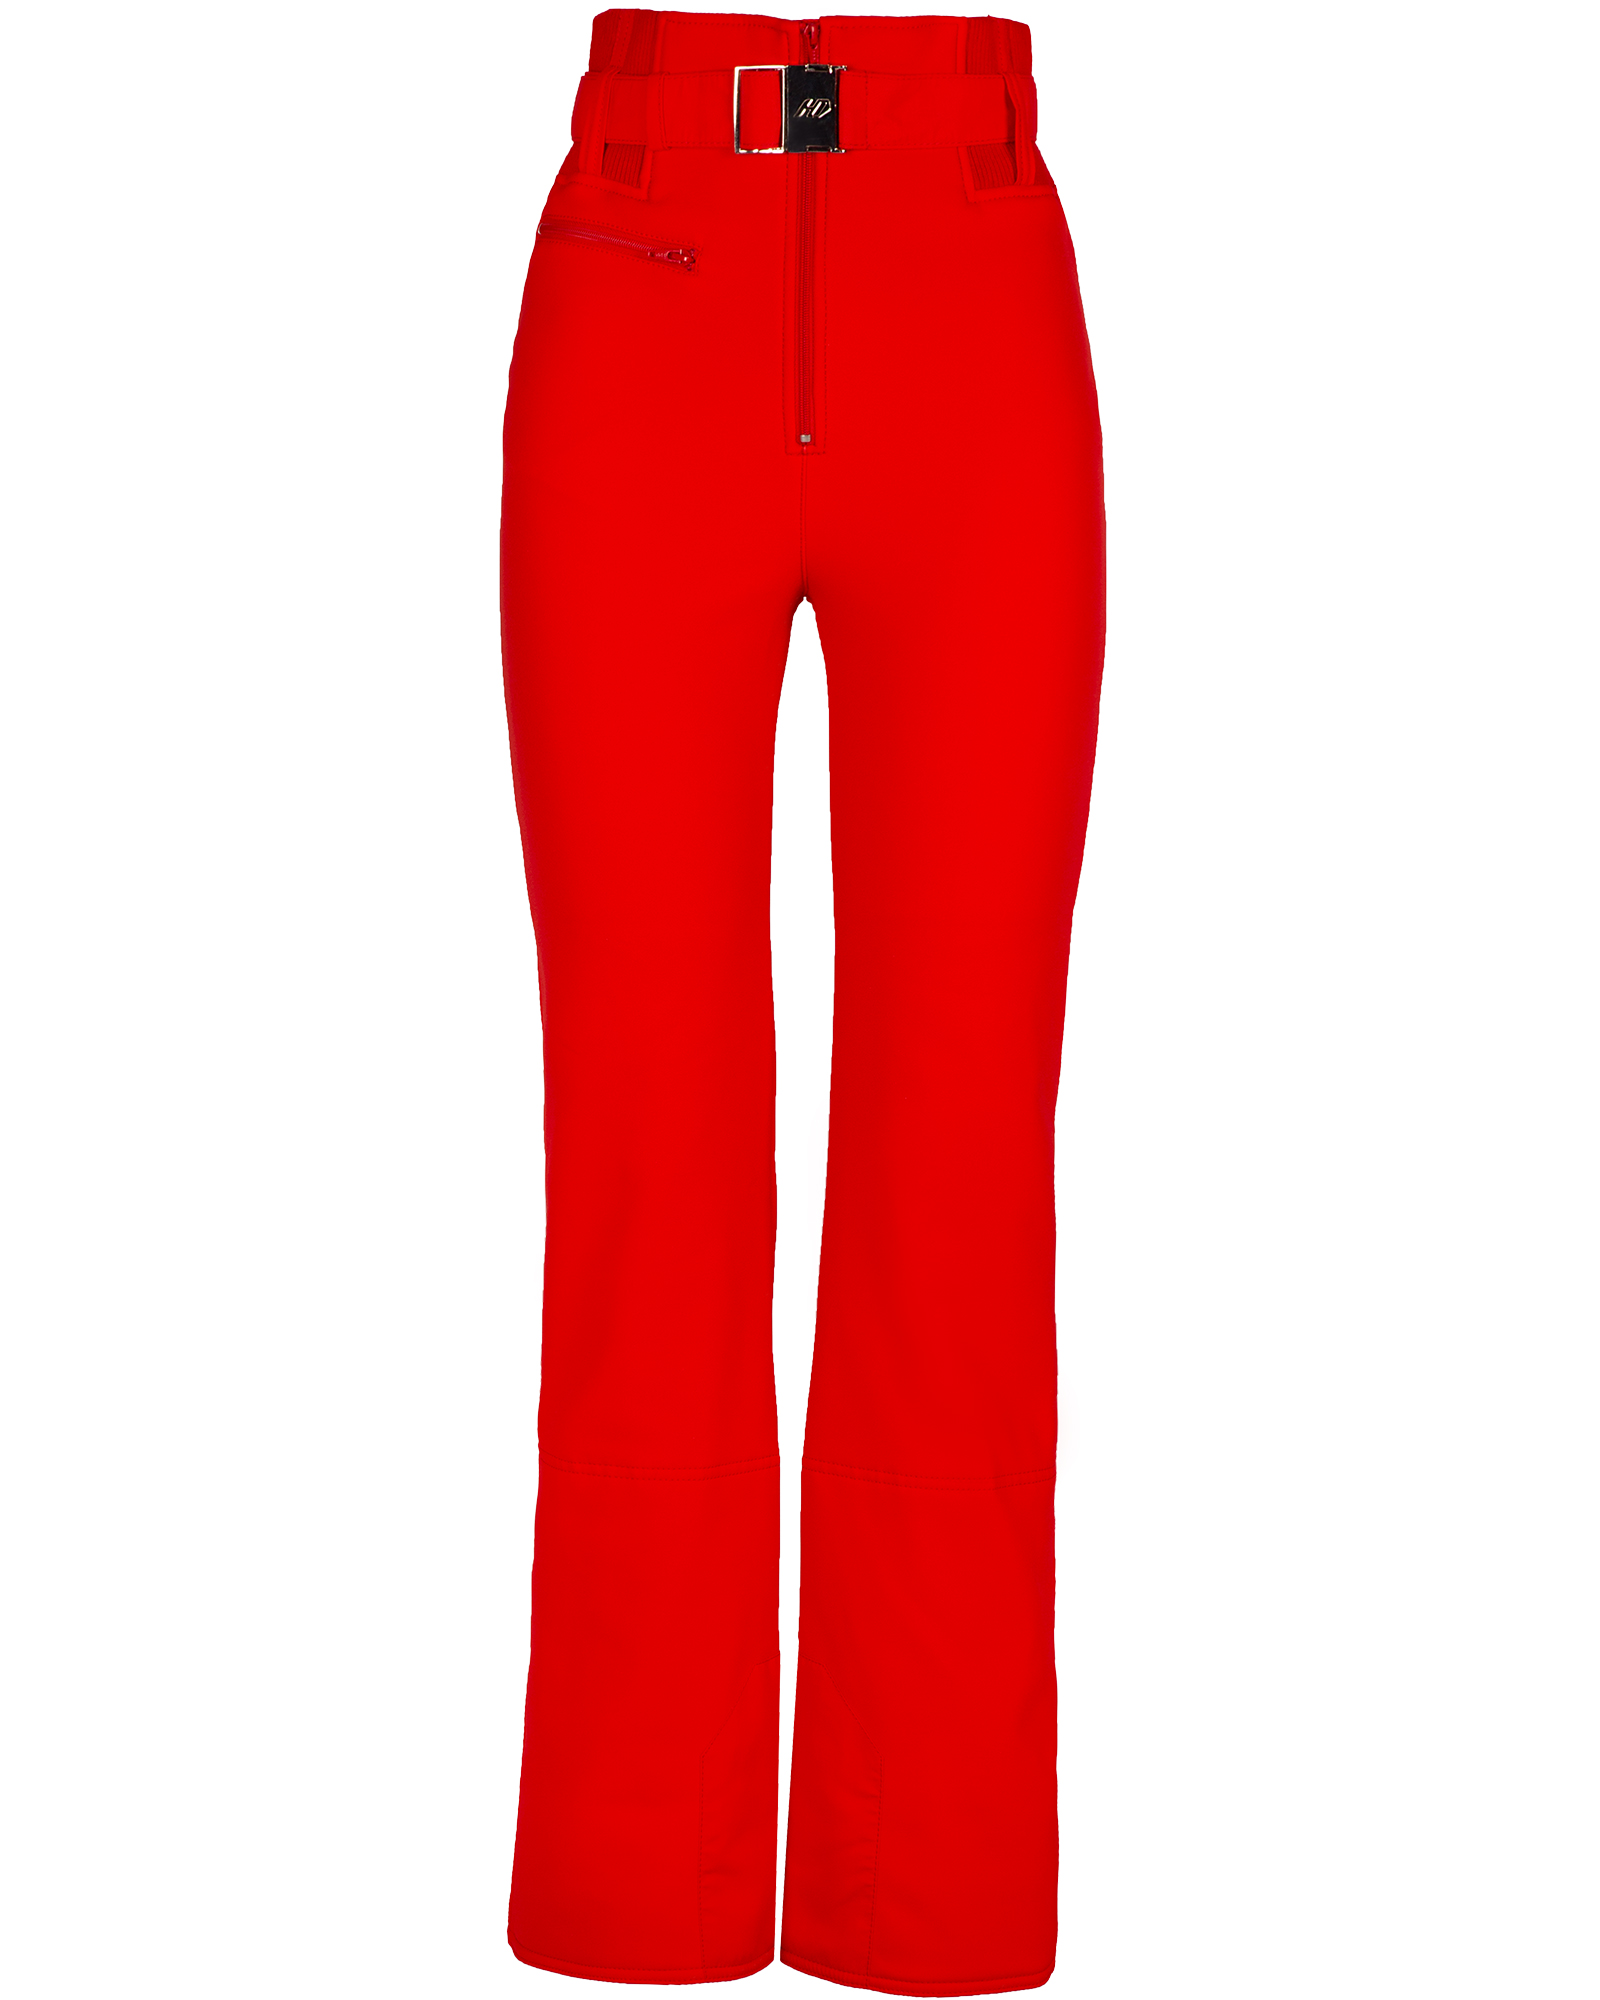 Duvillard Gridin Women’s Pants - Red 18